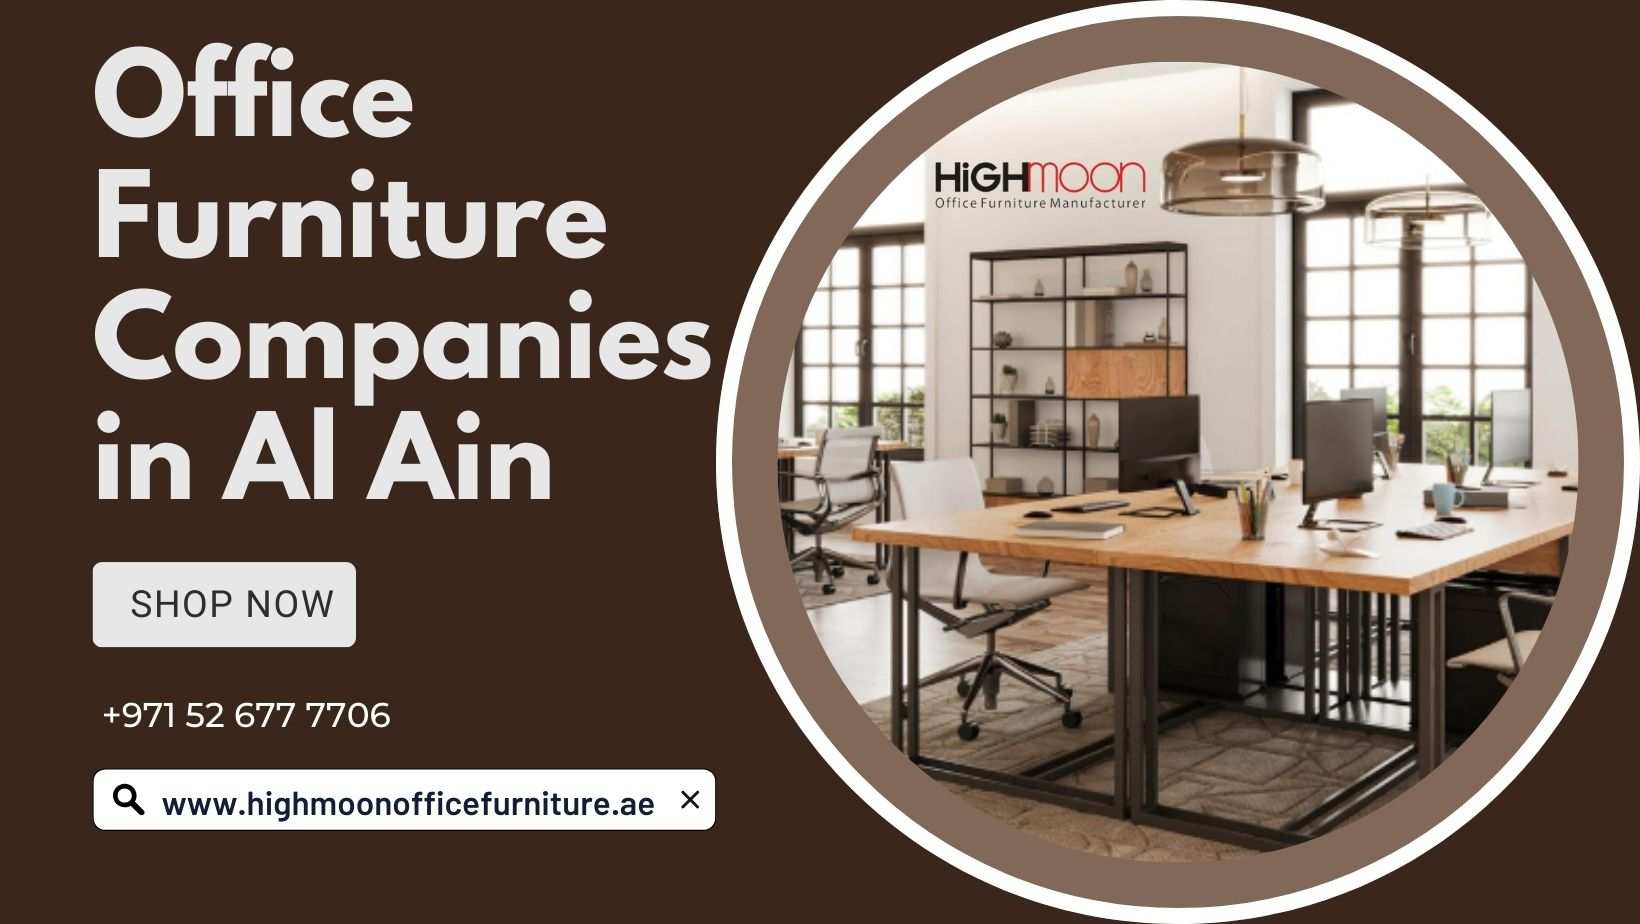 Office Furniture Companies in Al Ain